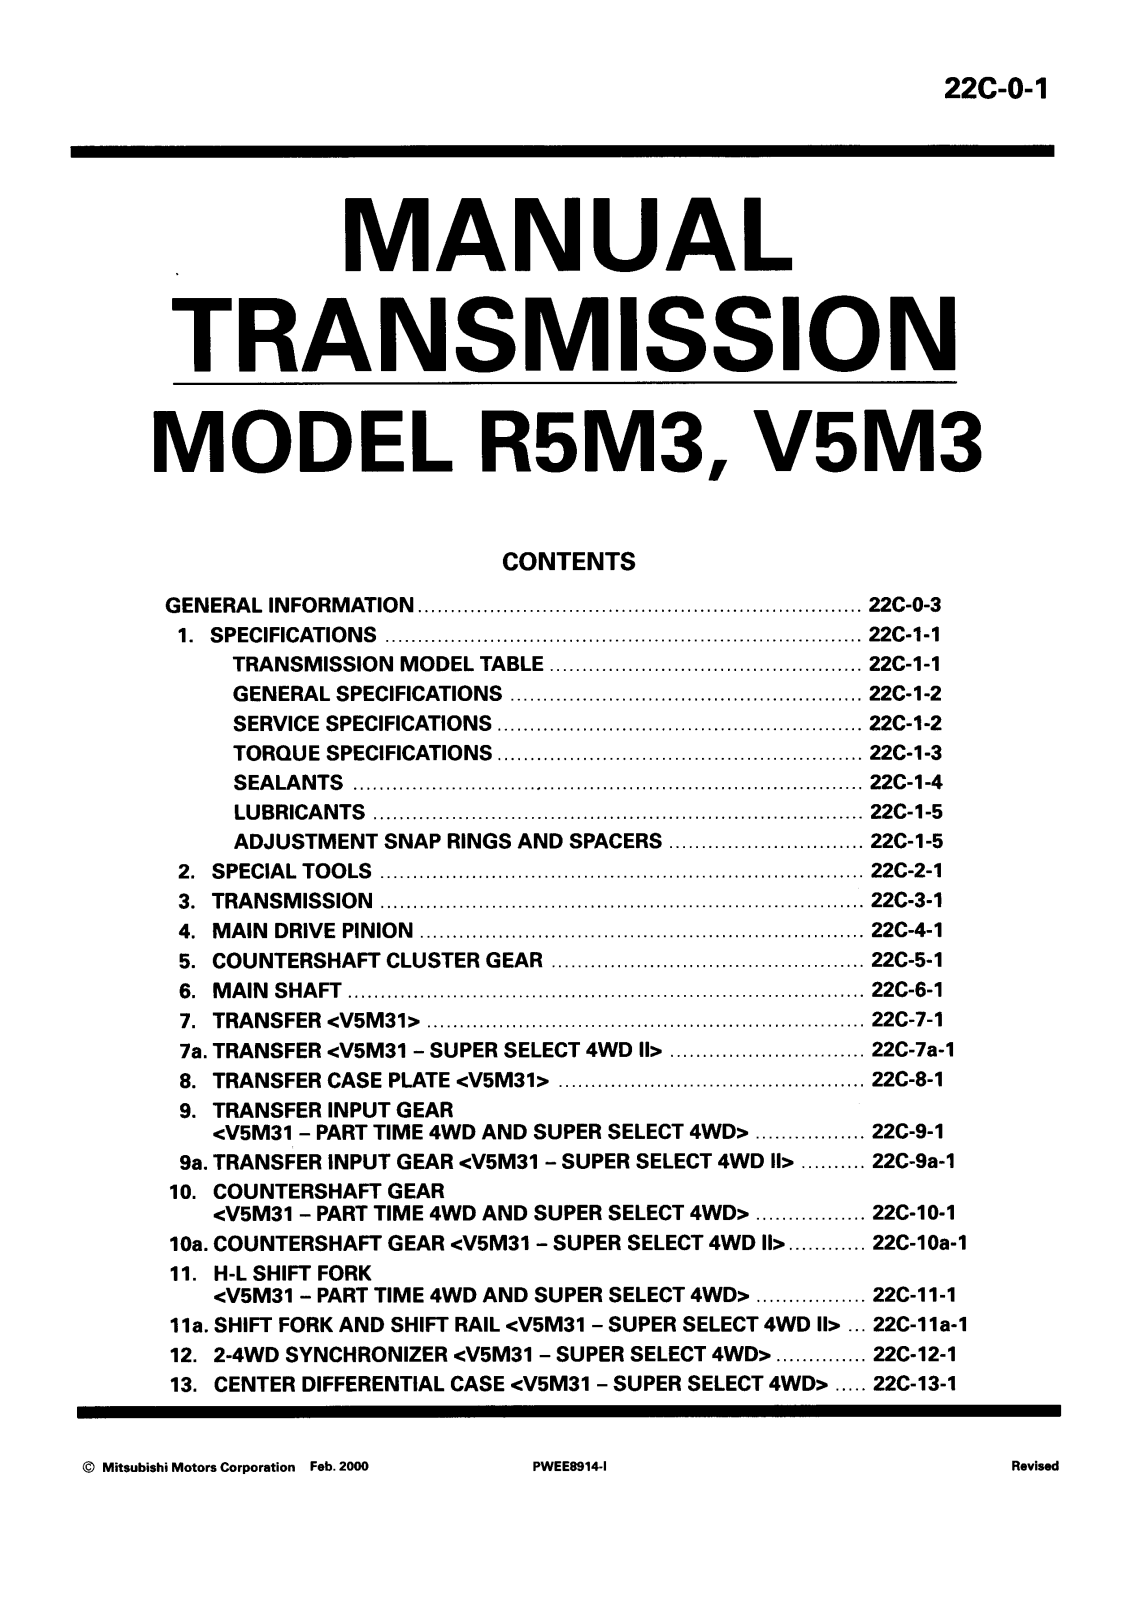 Mitsubishi R5M3, PWEE8914-ABCDEFGHI 22C, V5M3 Service manual